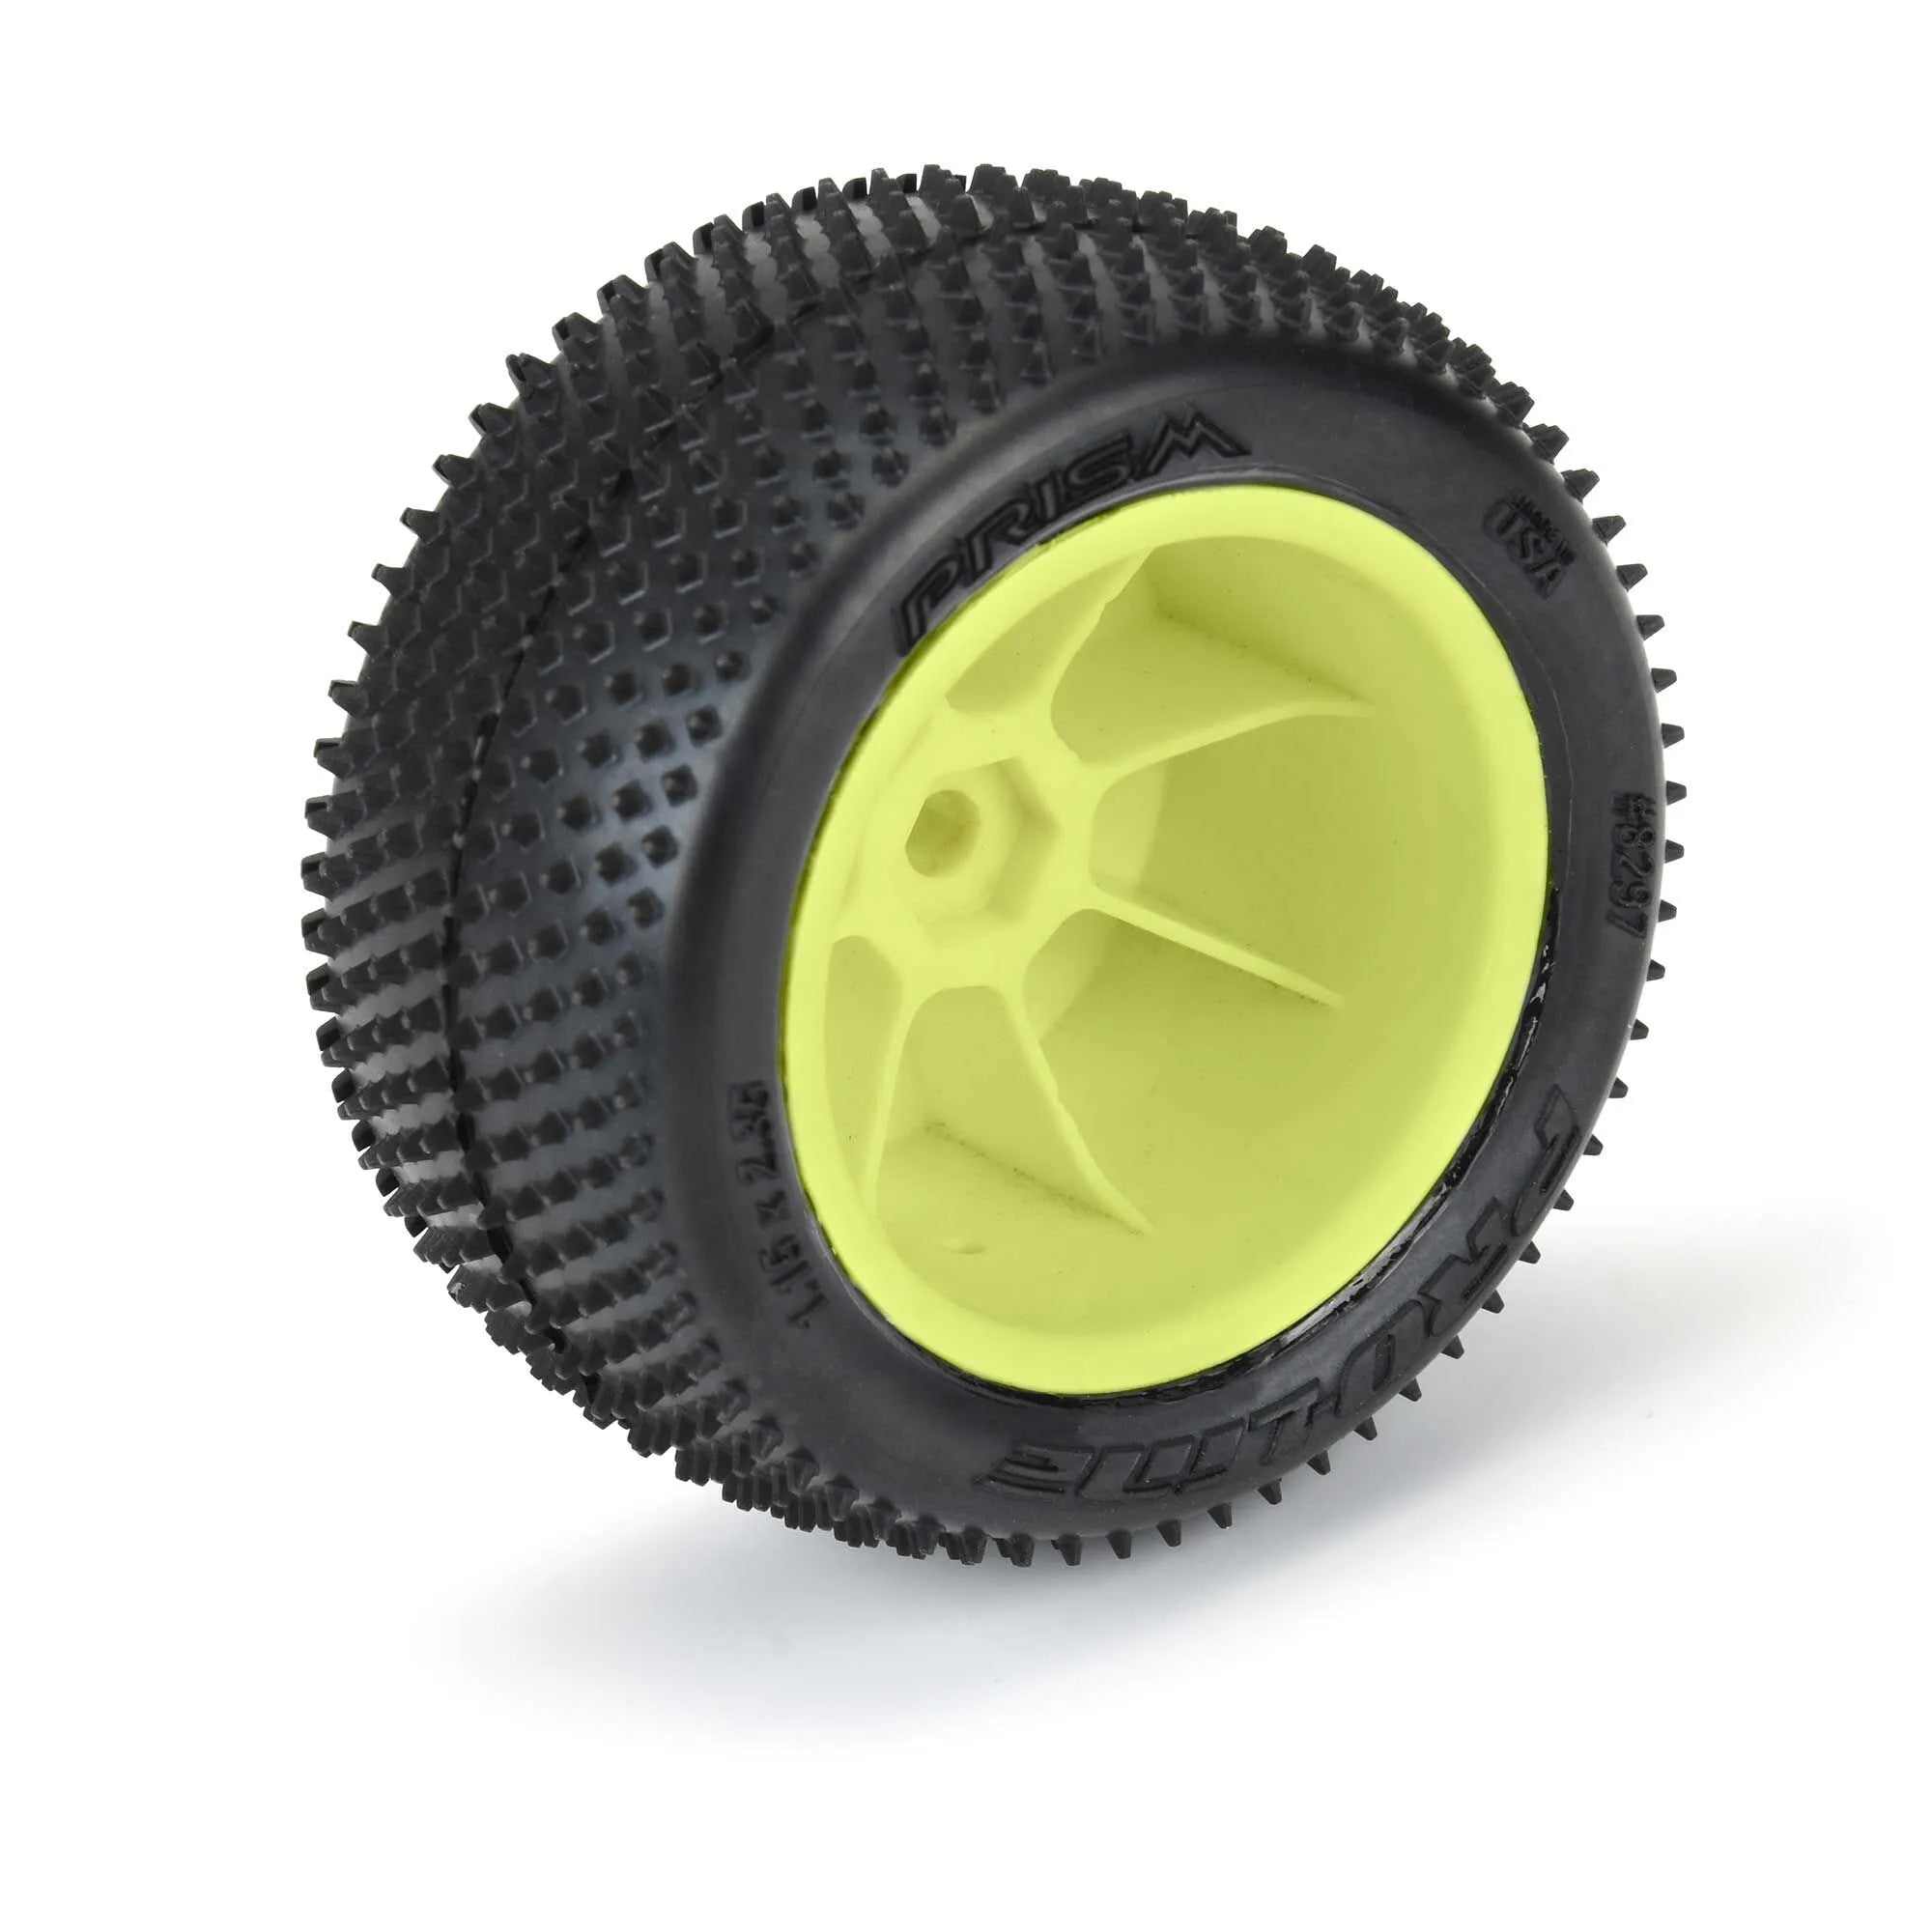 Proline Prism Carpet Tyres Mounted on Yellow Wheels, Mini-B Rear, PR8297-12 - [Sunshine-Coast] - Proline Racing - [RC-Car] - [Scale-Model]